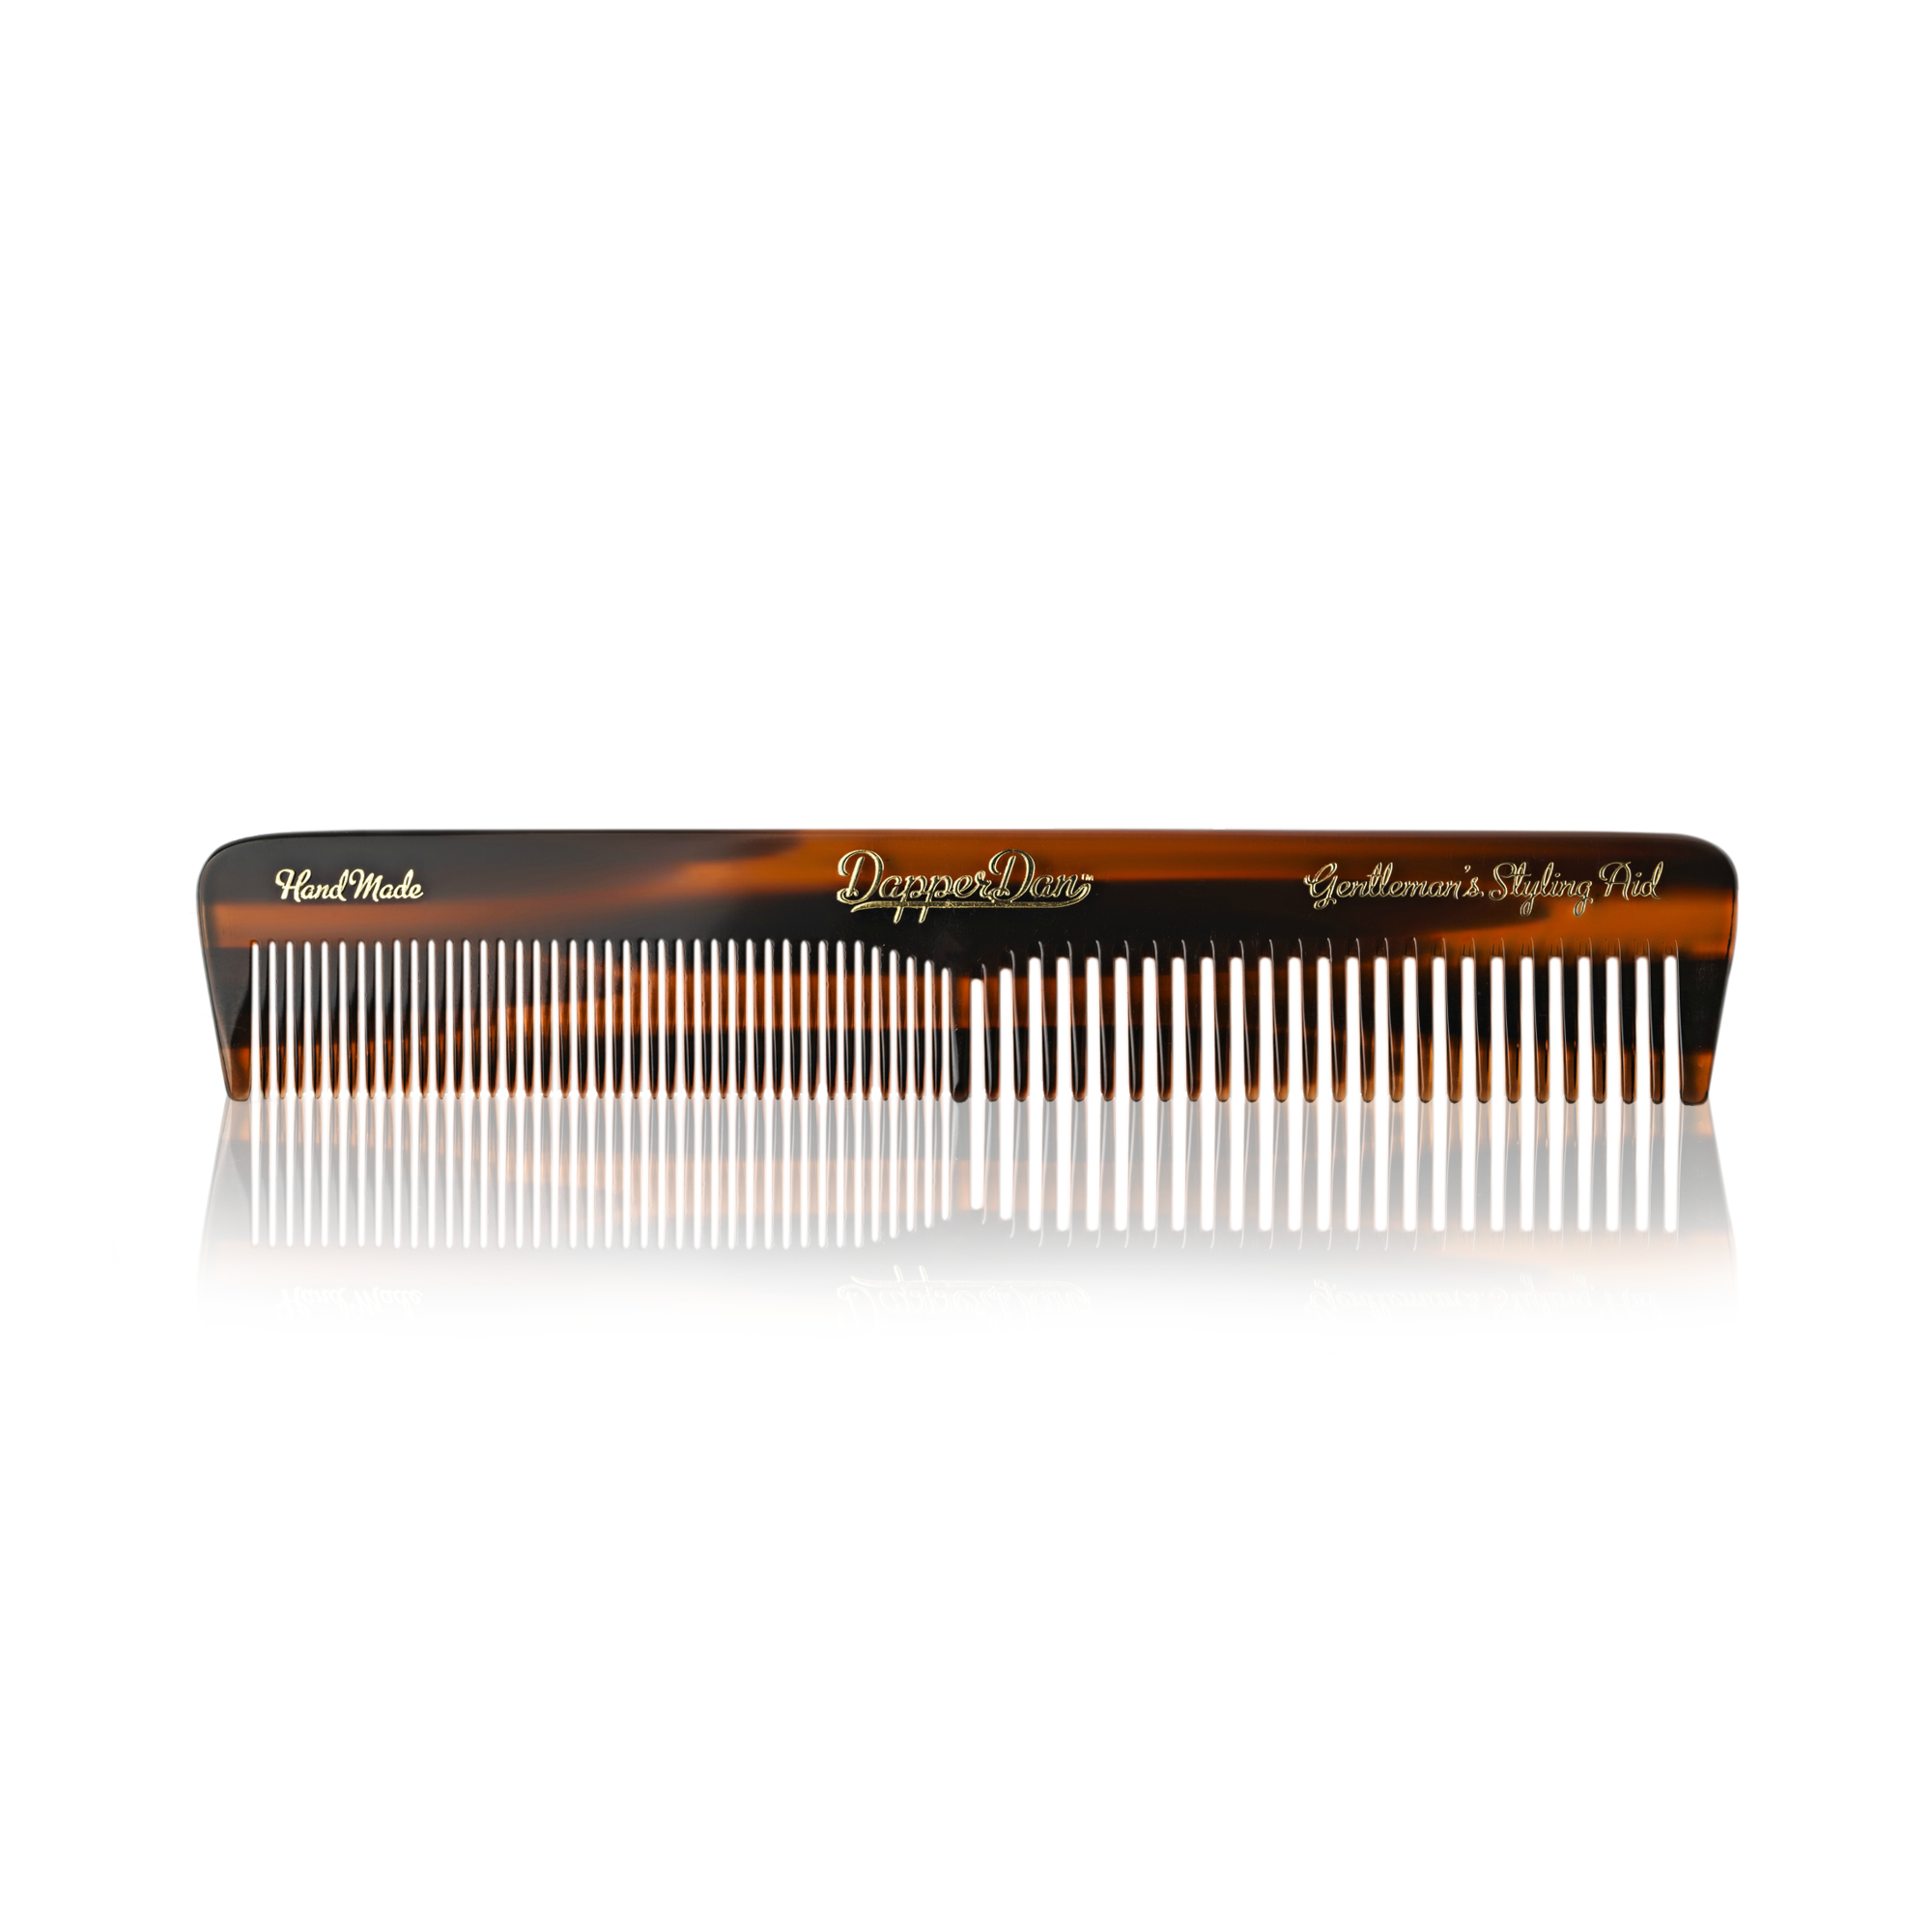 Hand Made Styling Comb - Dapper Dan